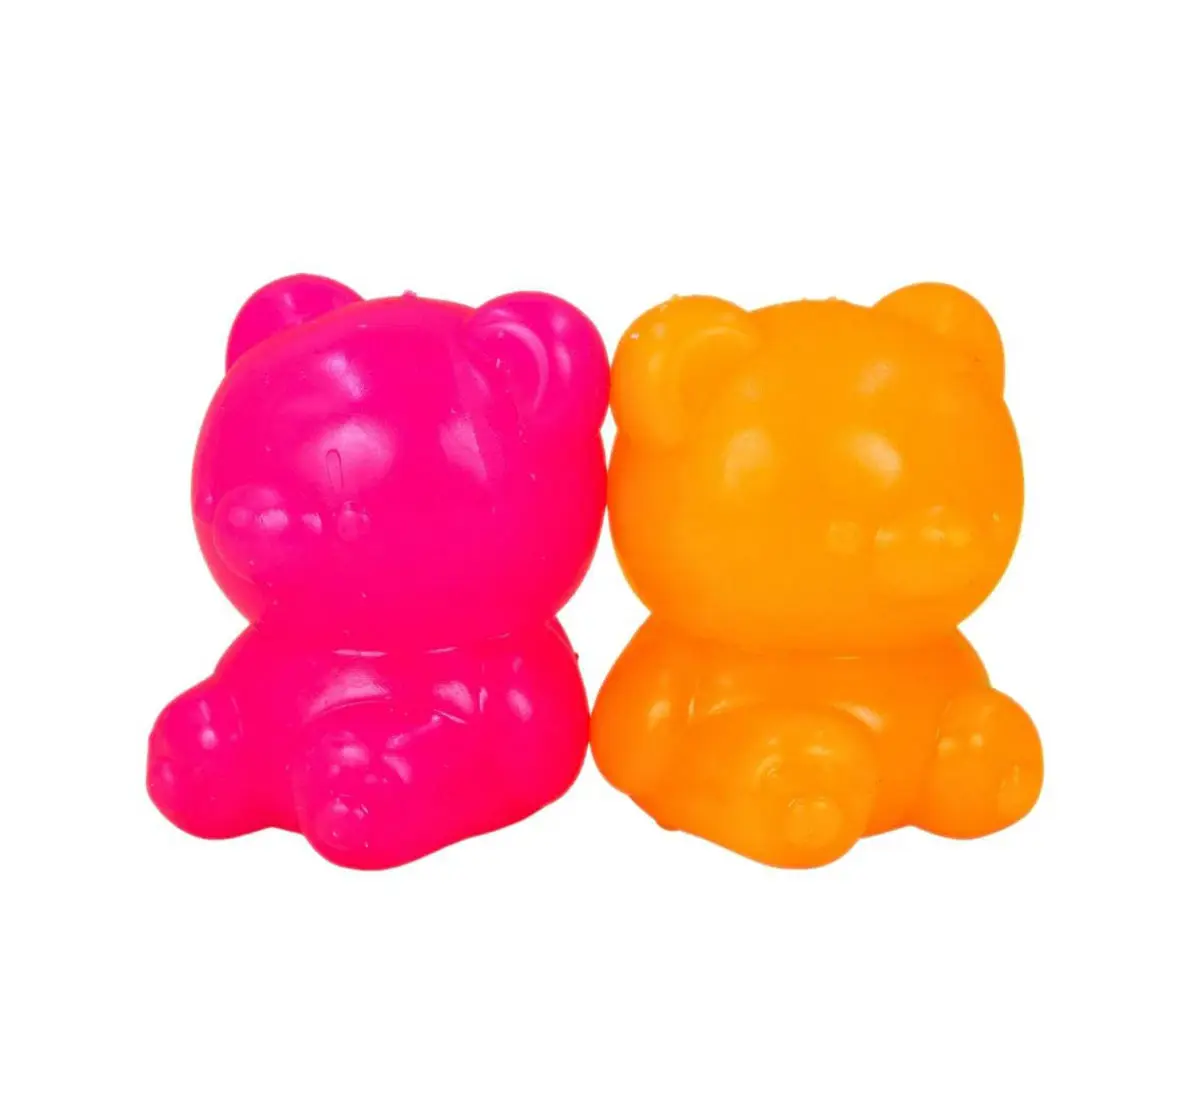 Scoobies Beary Squishy Gumbear 2-in-1 Pack Multicolour, 3Y+